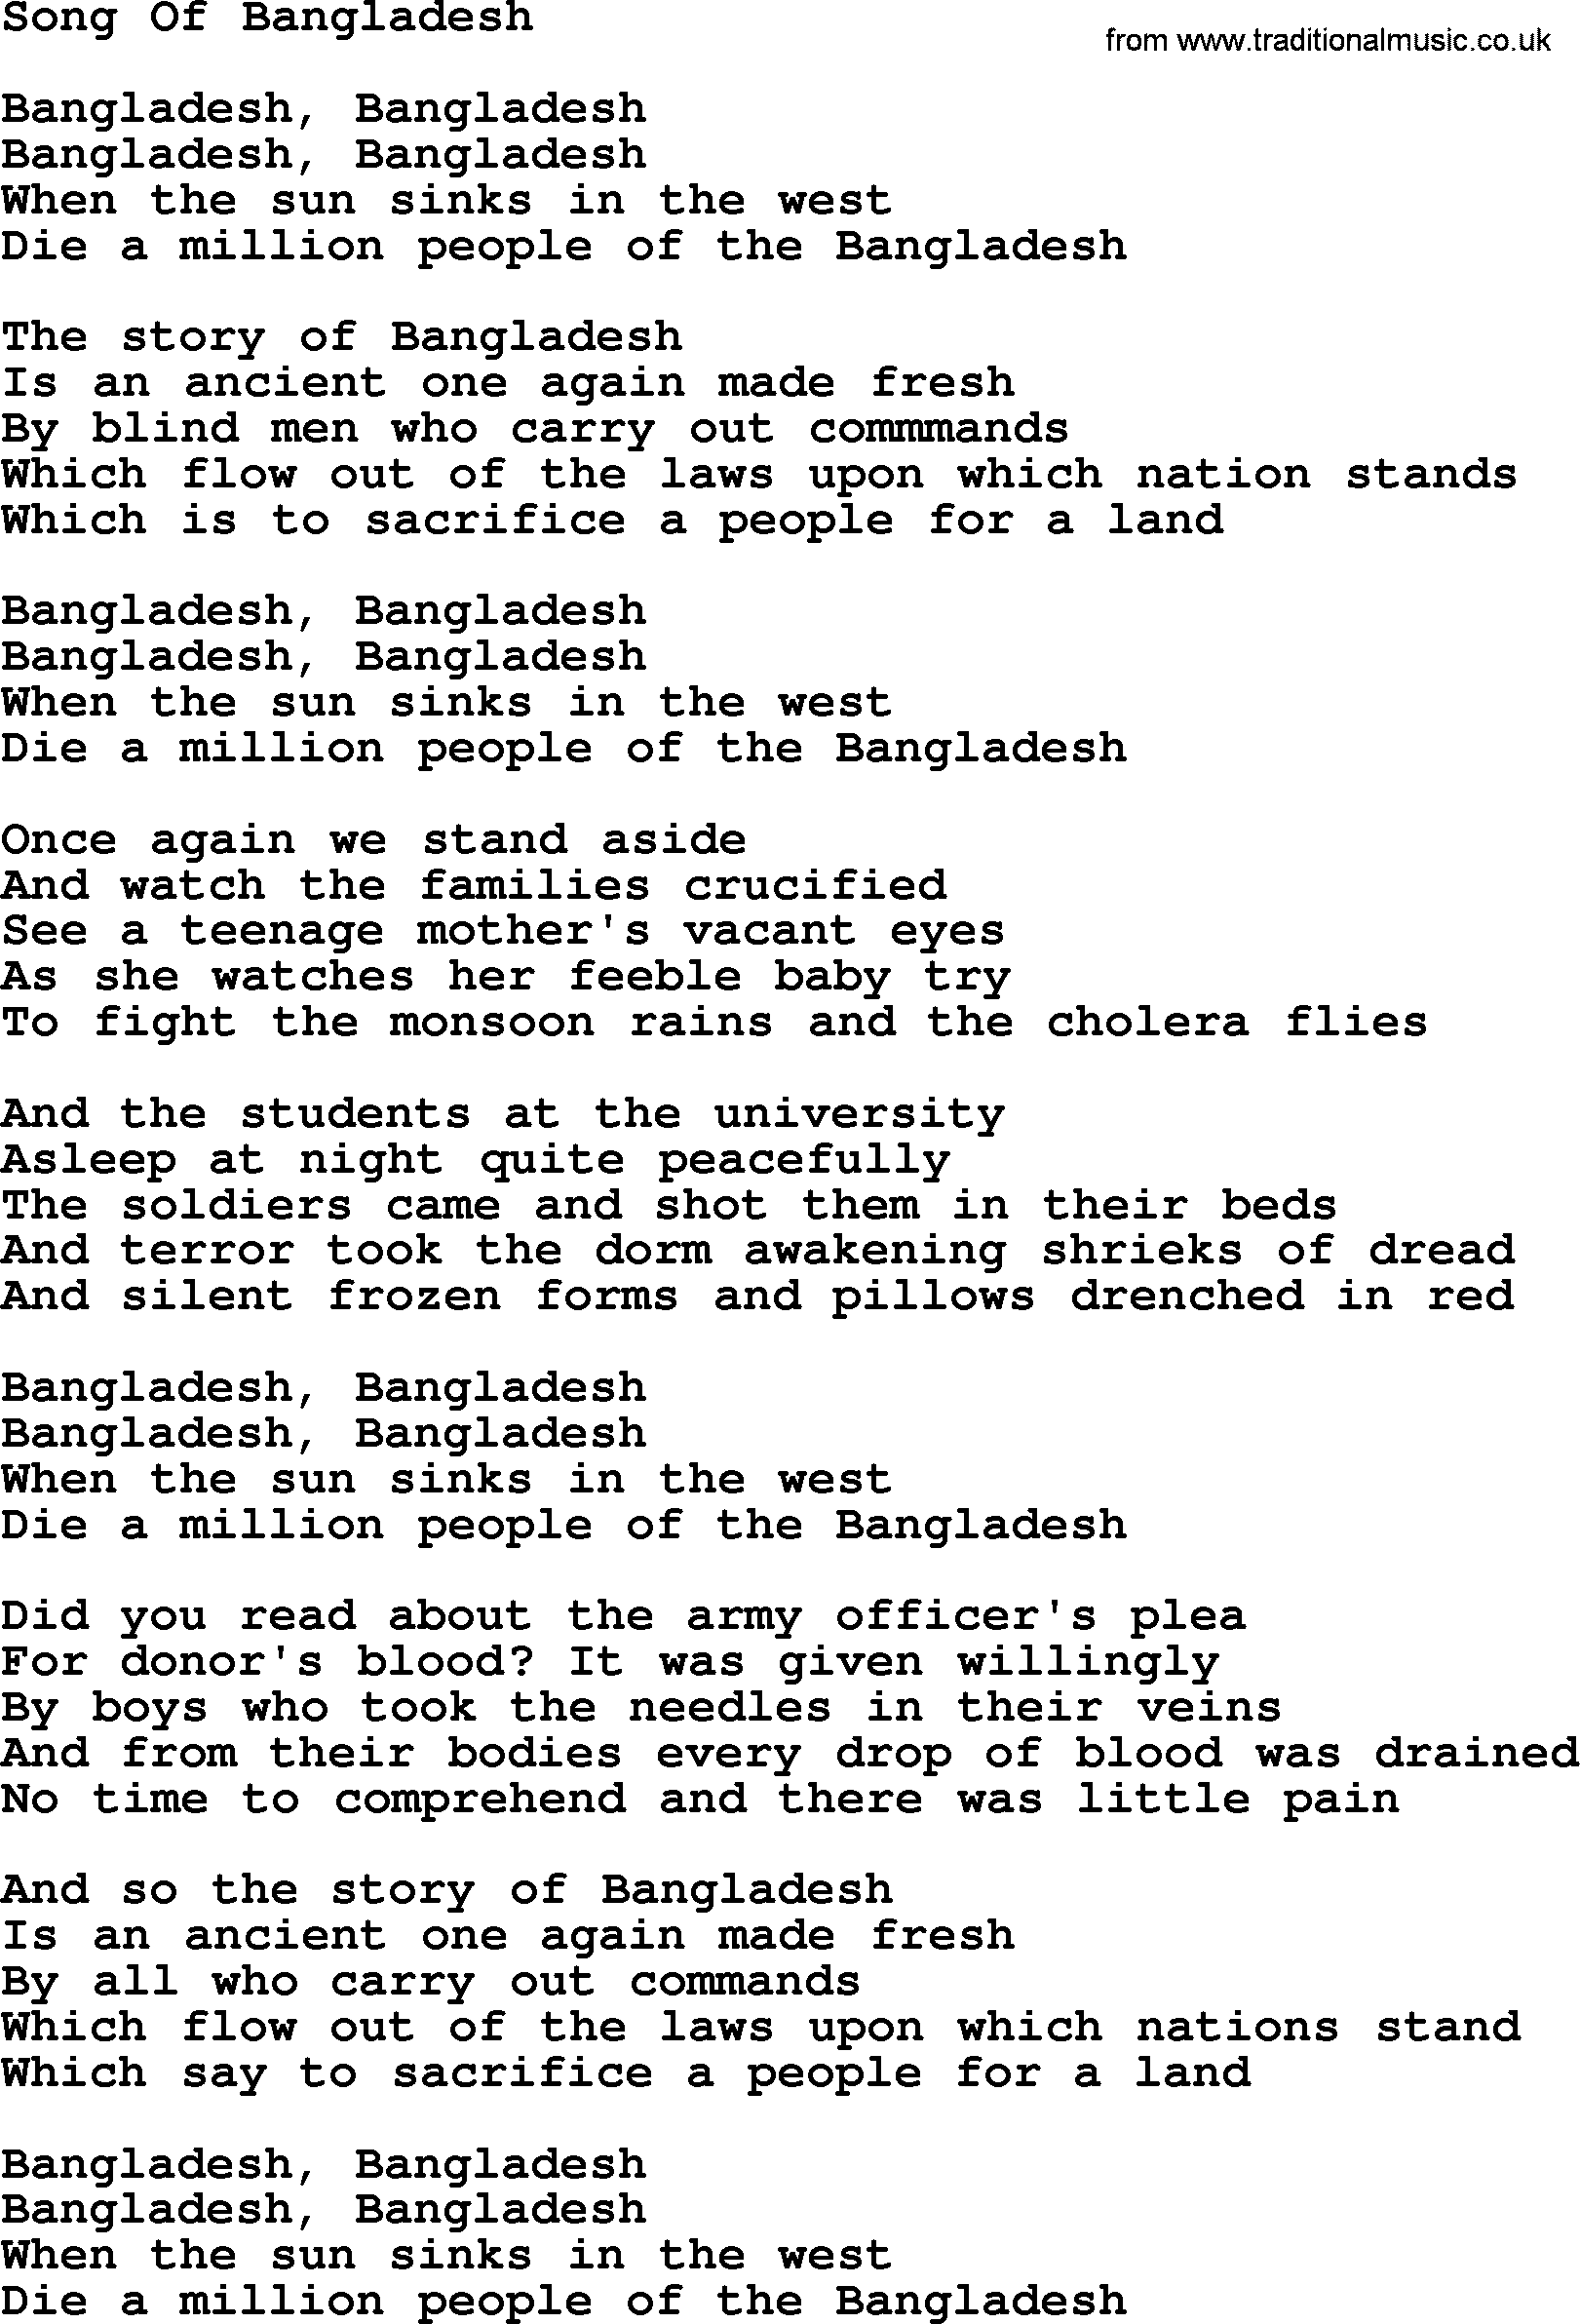 Joan Baez song Song Of Bangladesh, lyrics